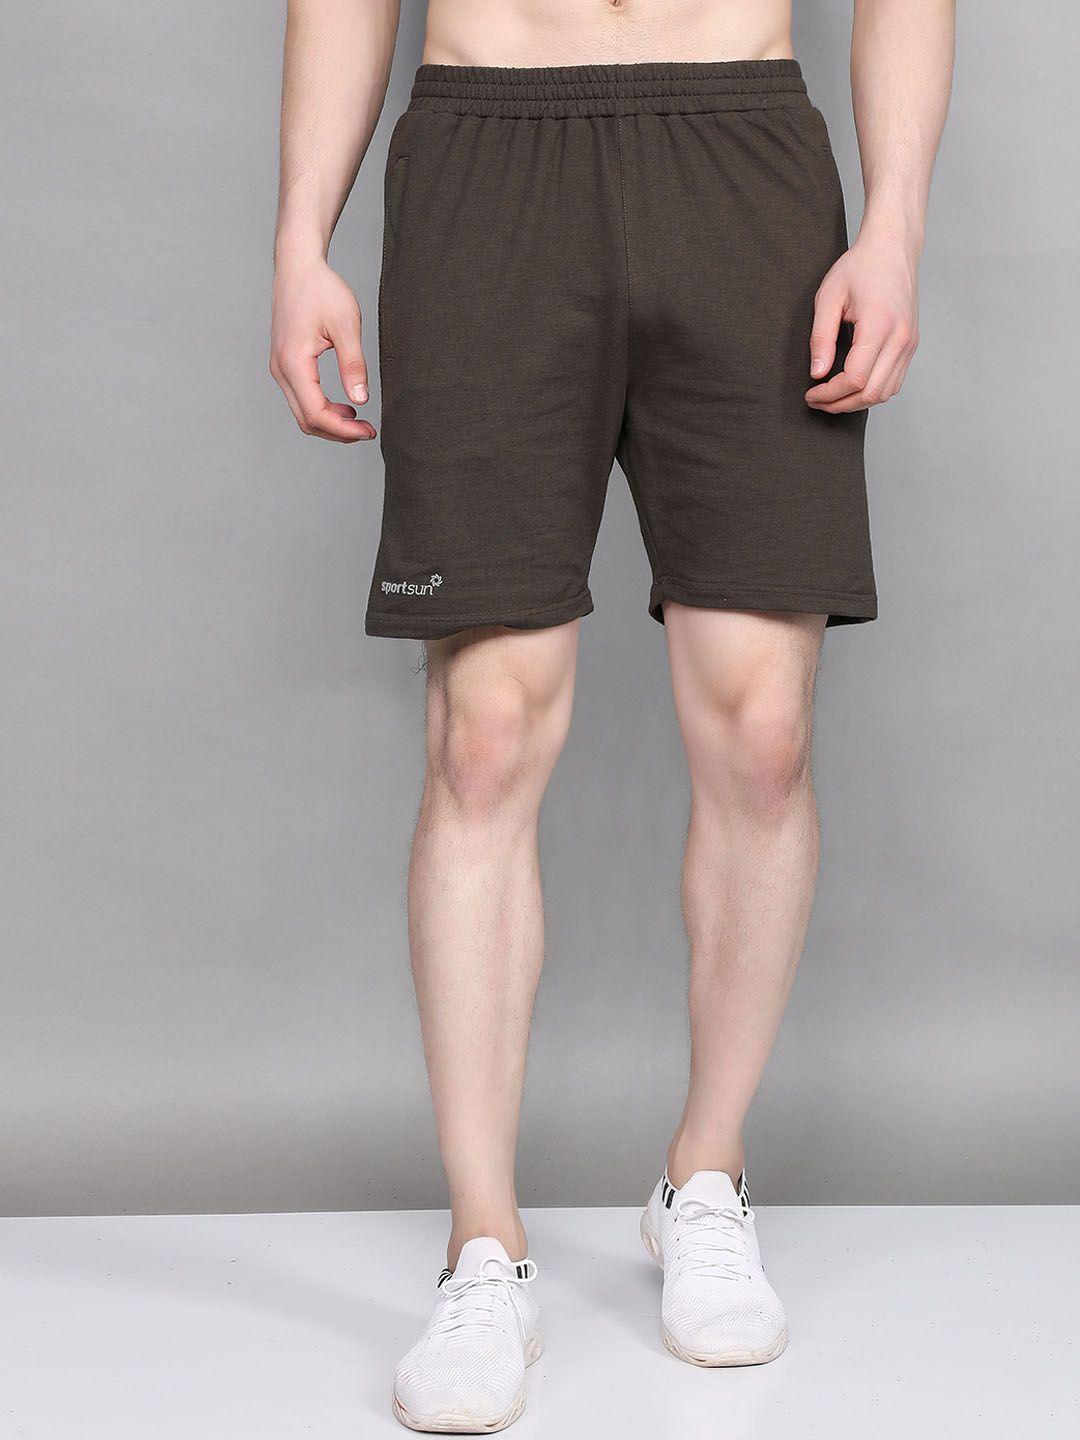 sport-sun-men-mid-rise-shorts